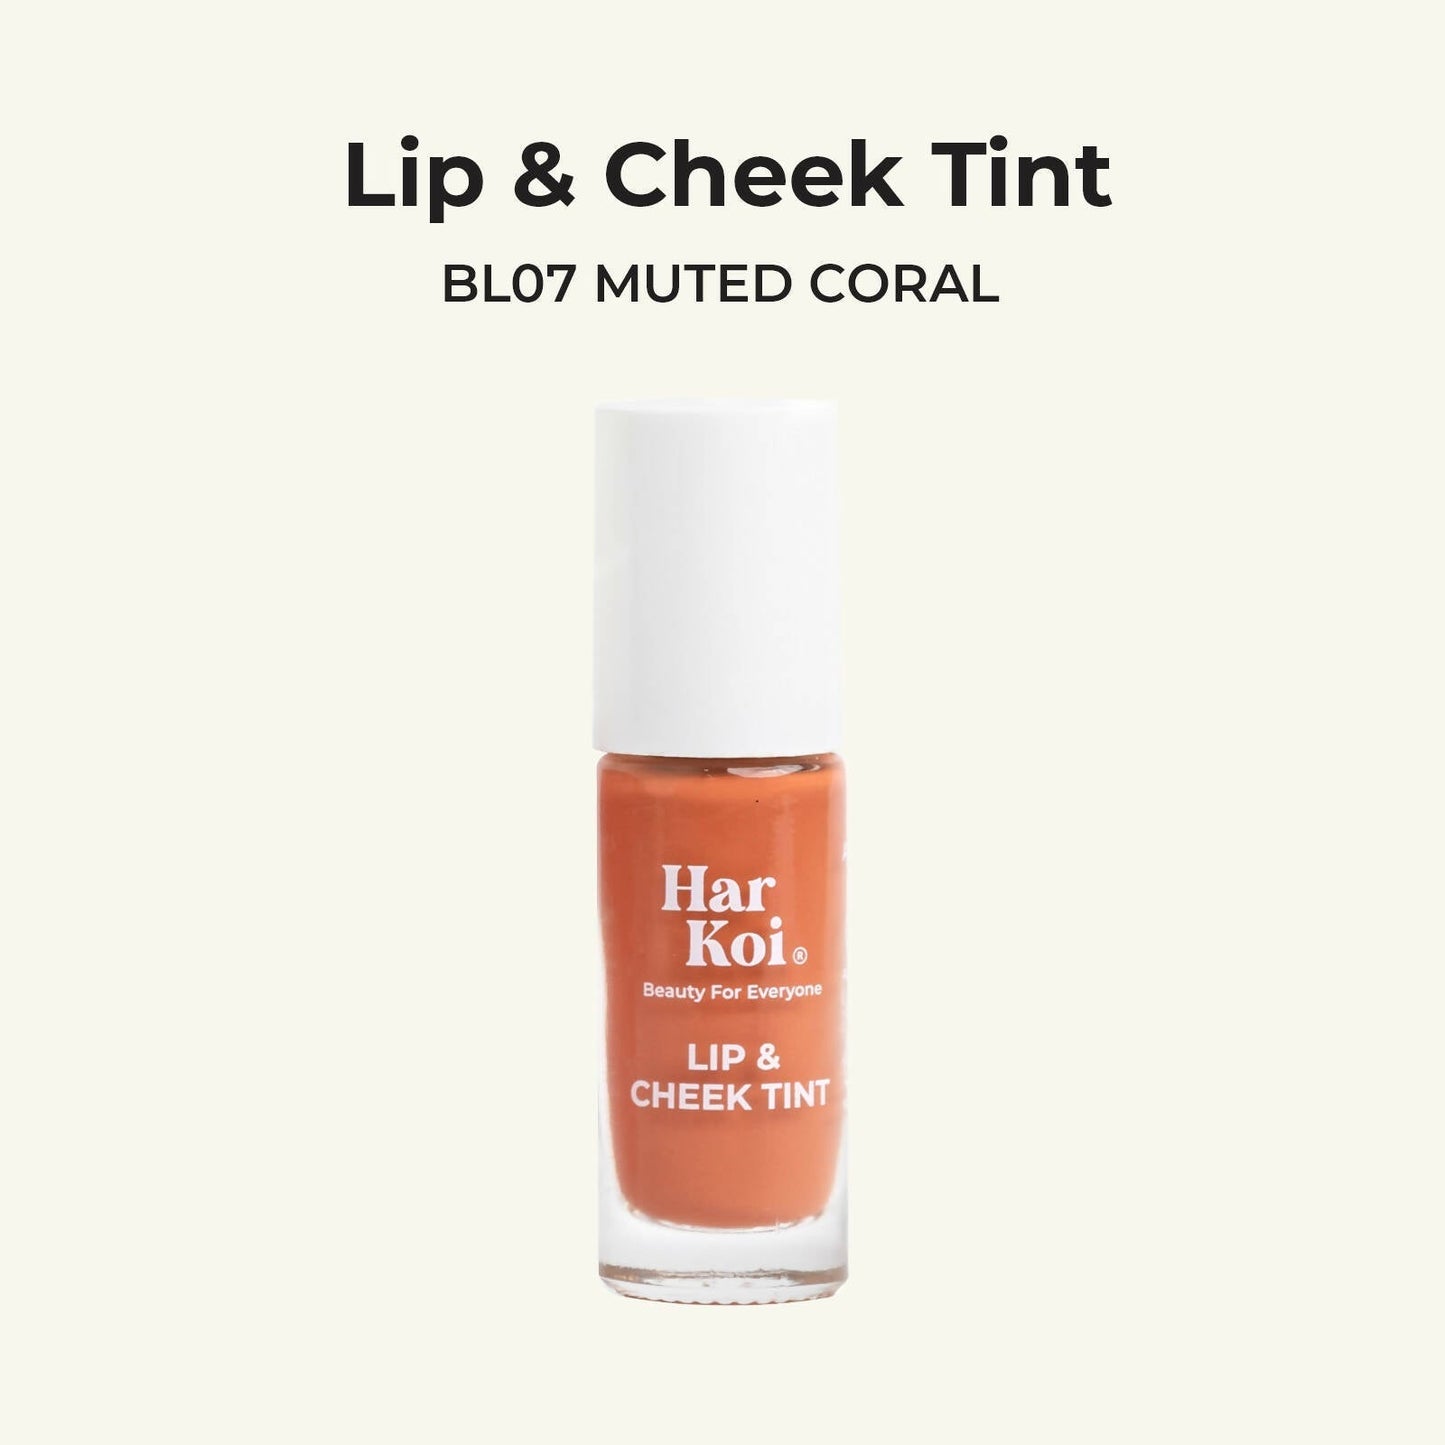 The Harkoi Lip & Cheek Tint - Muted Coral